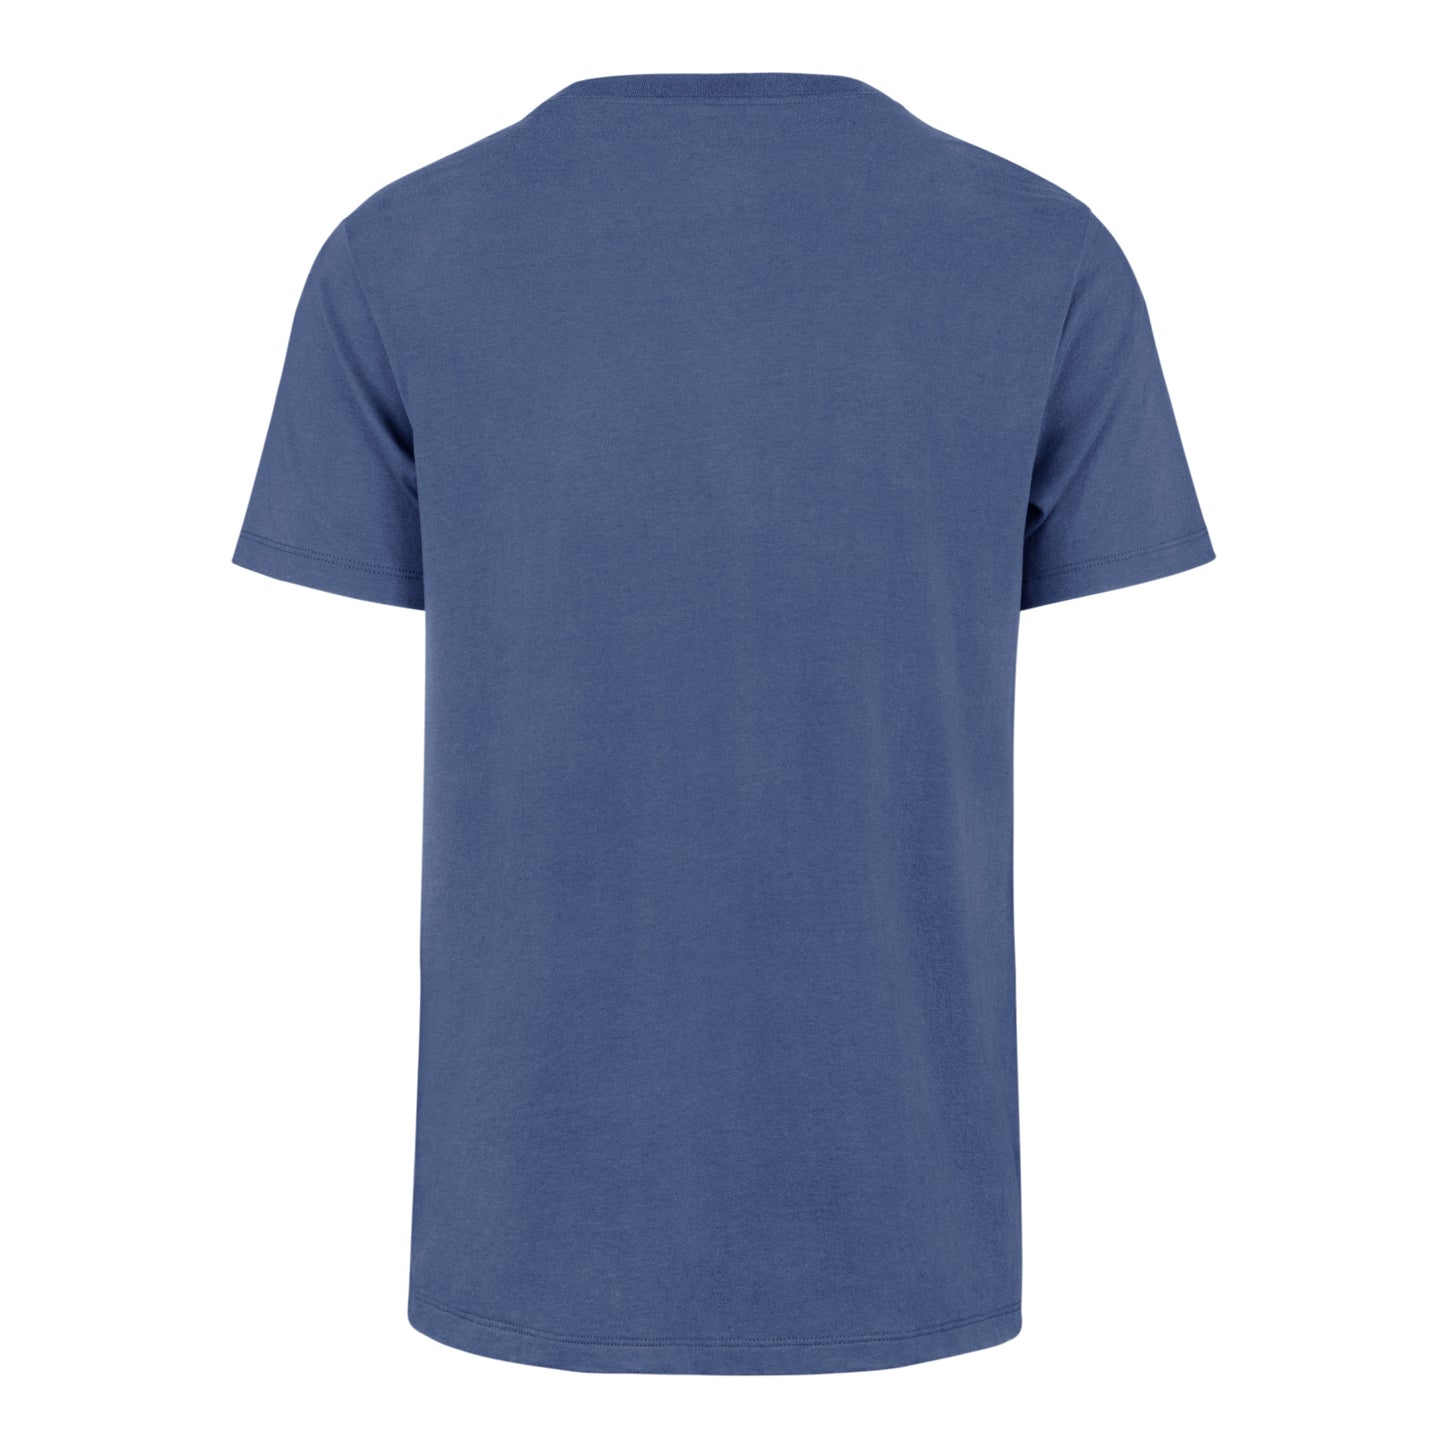 Chicago Cubs Blue Cadet Premier Franklin Bullseye T-Shirt